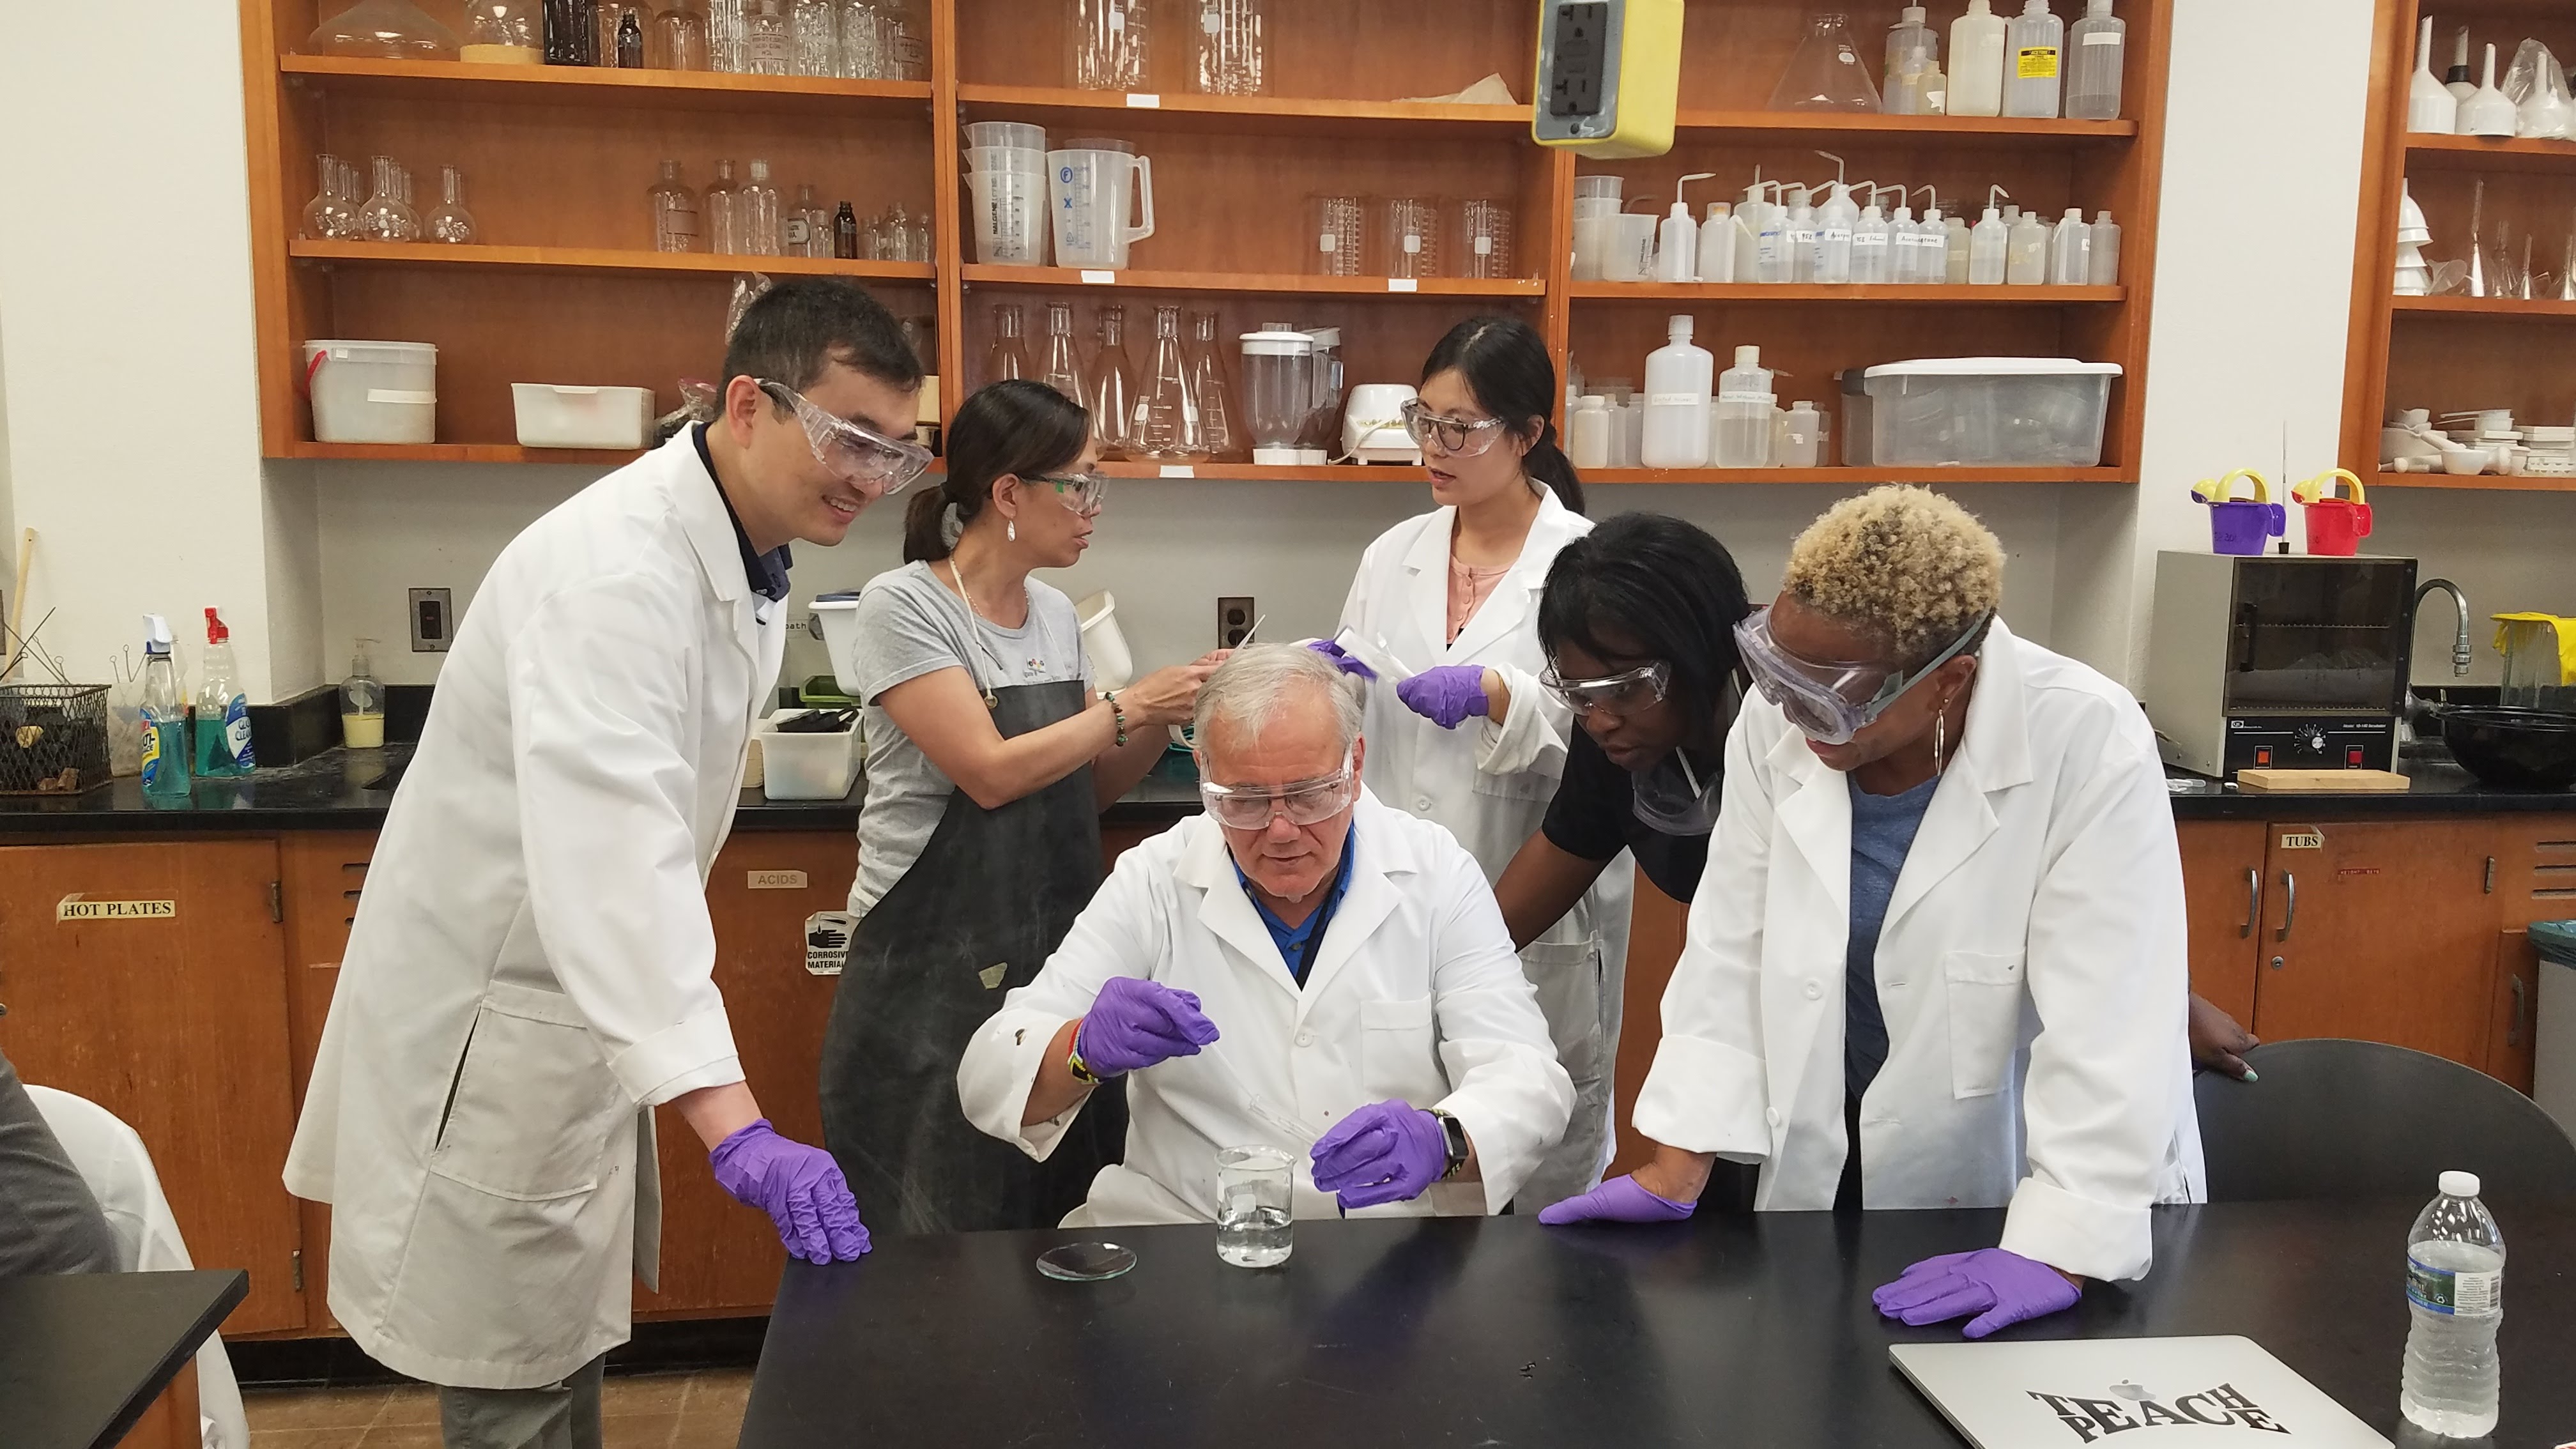 Joe Krajcik in lab surrounded by researchers